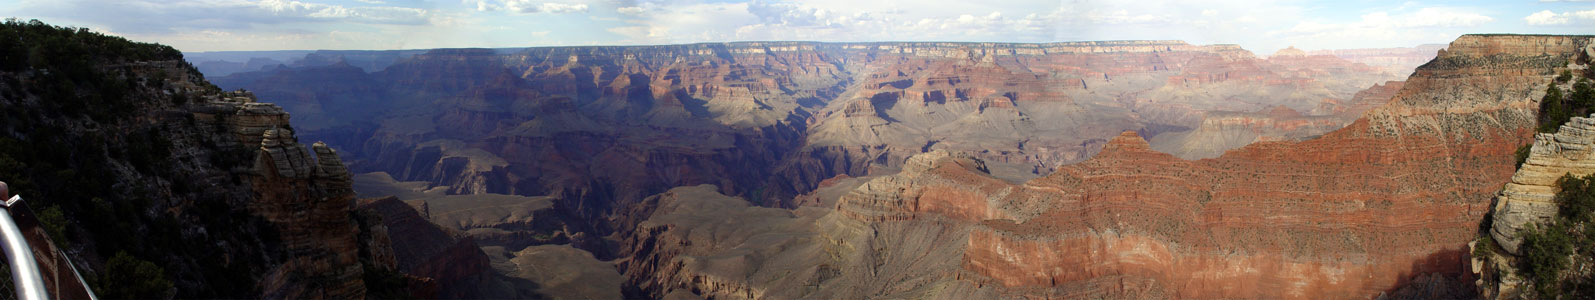 File:Grand-canyon-panorama12.jpg